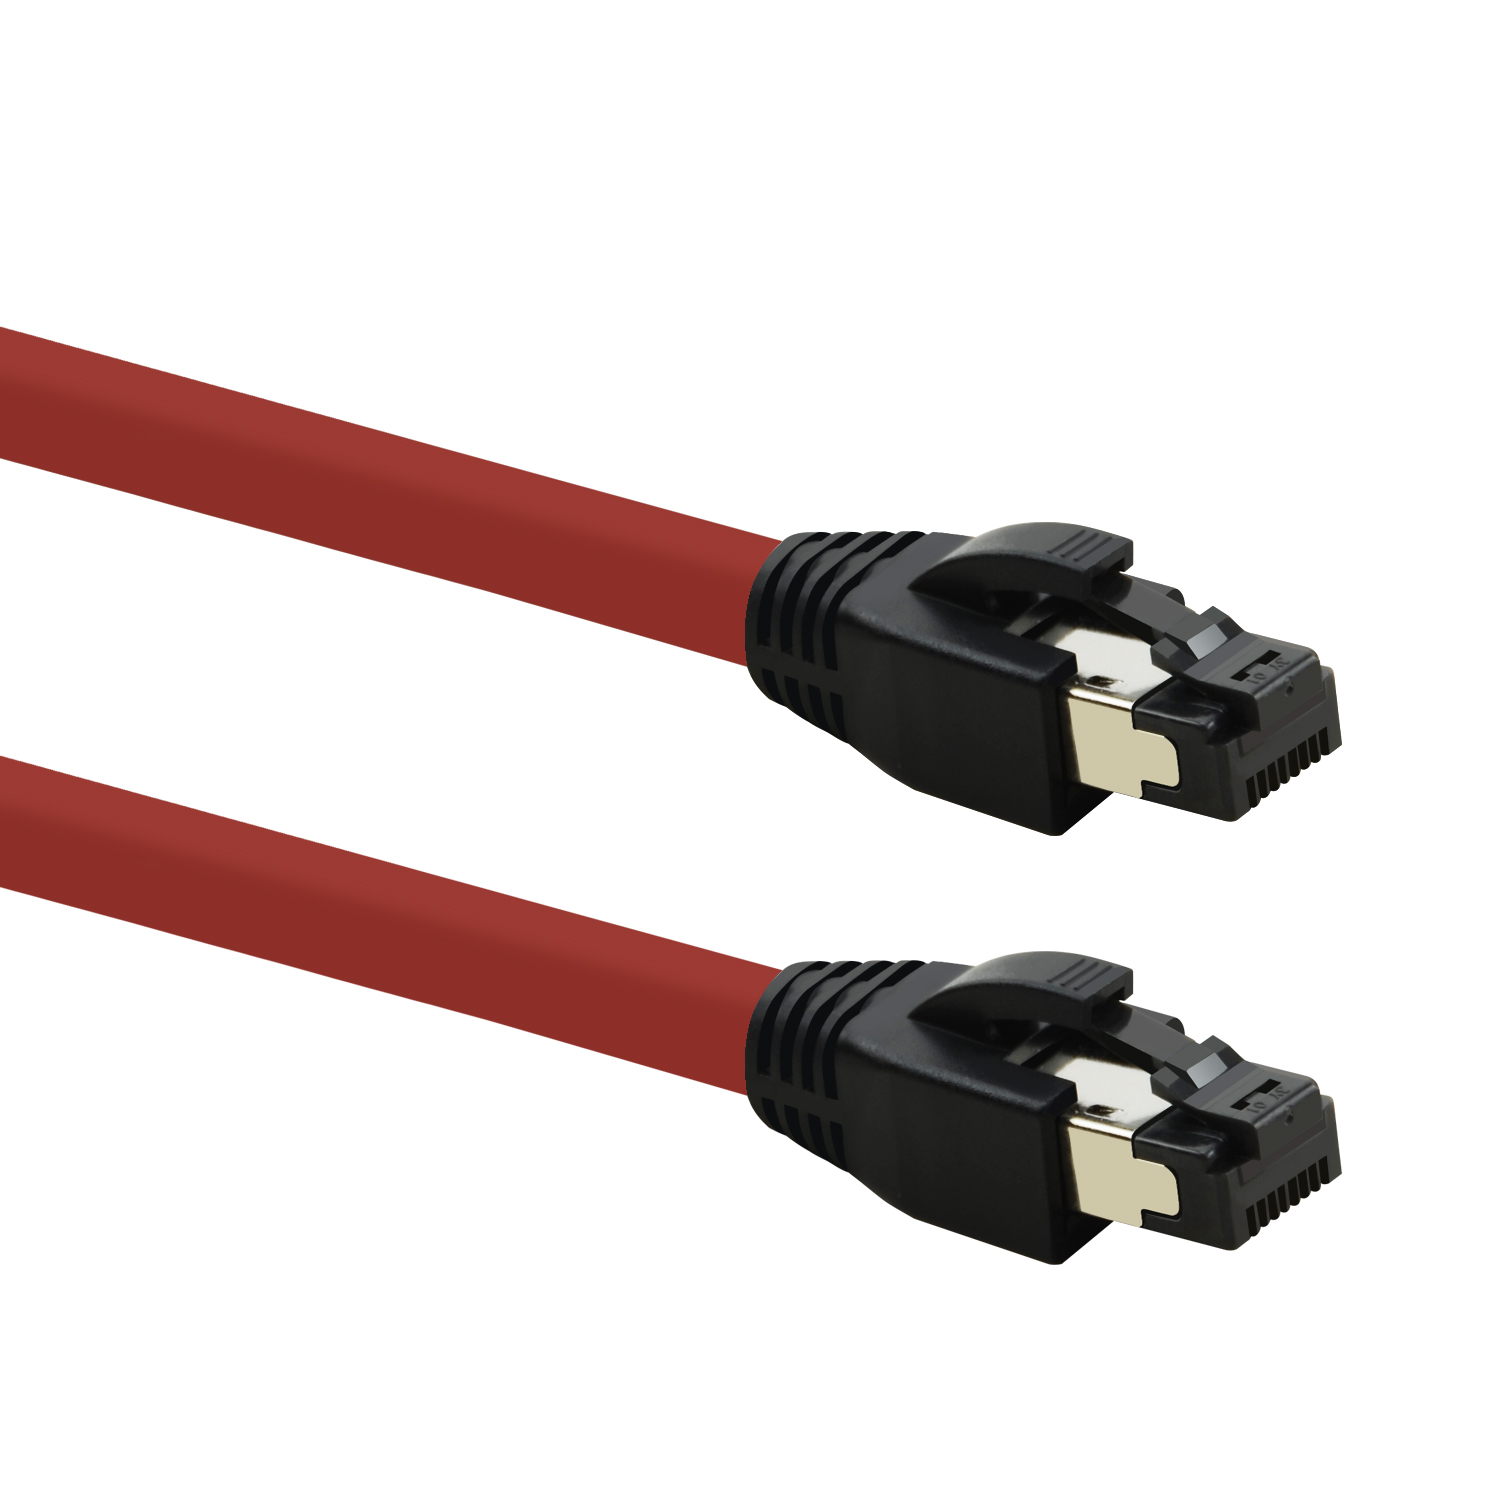 10er Pack / 40 S/FTP rot, m Netzwerkkabel, 2m 2 GBit, Patchkabel TPFNET Netzwerkkabel